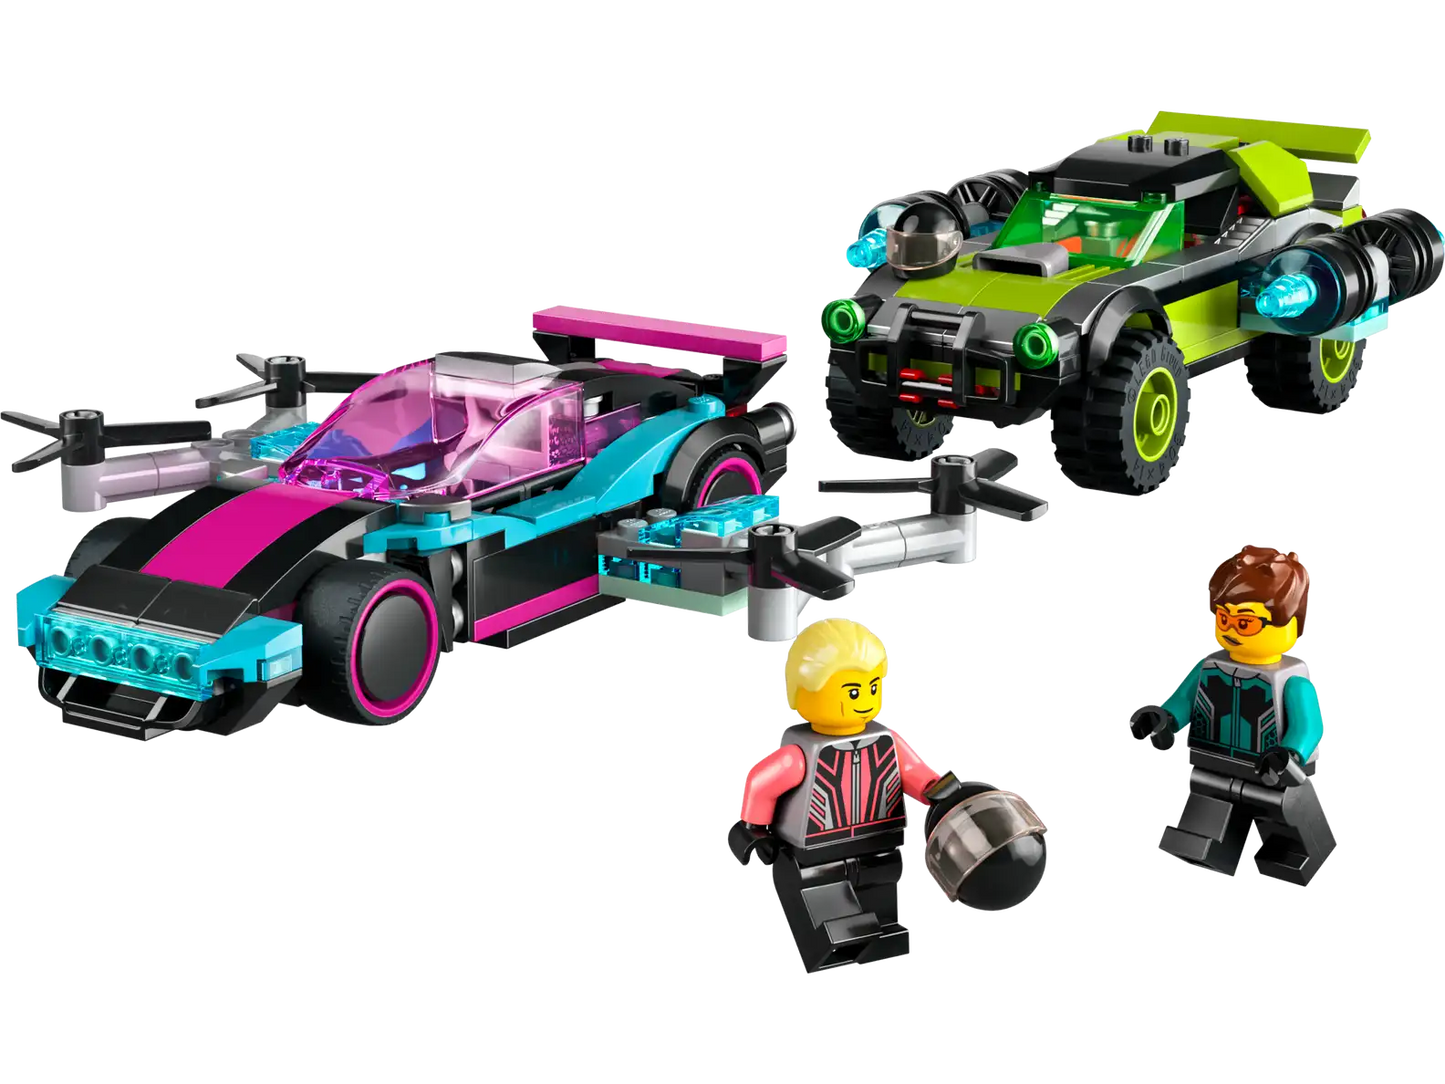 Modified Race Cars City Lego 60396